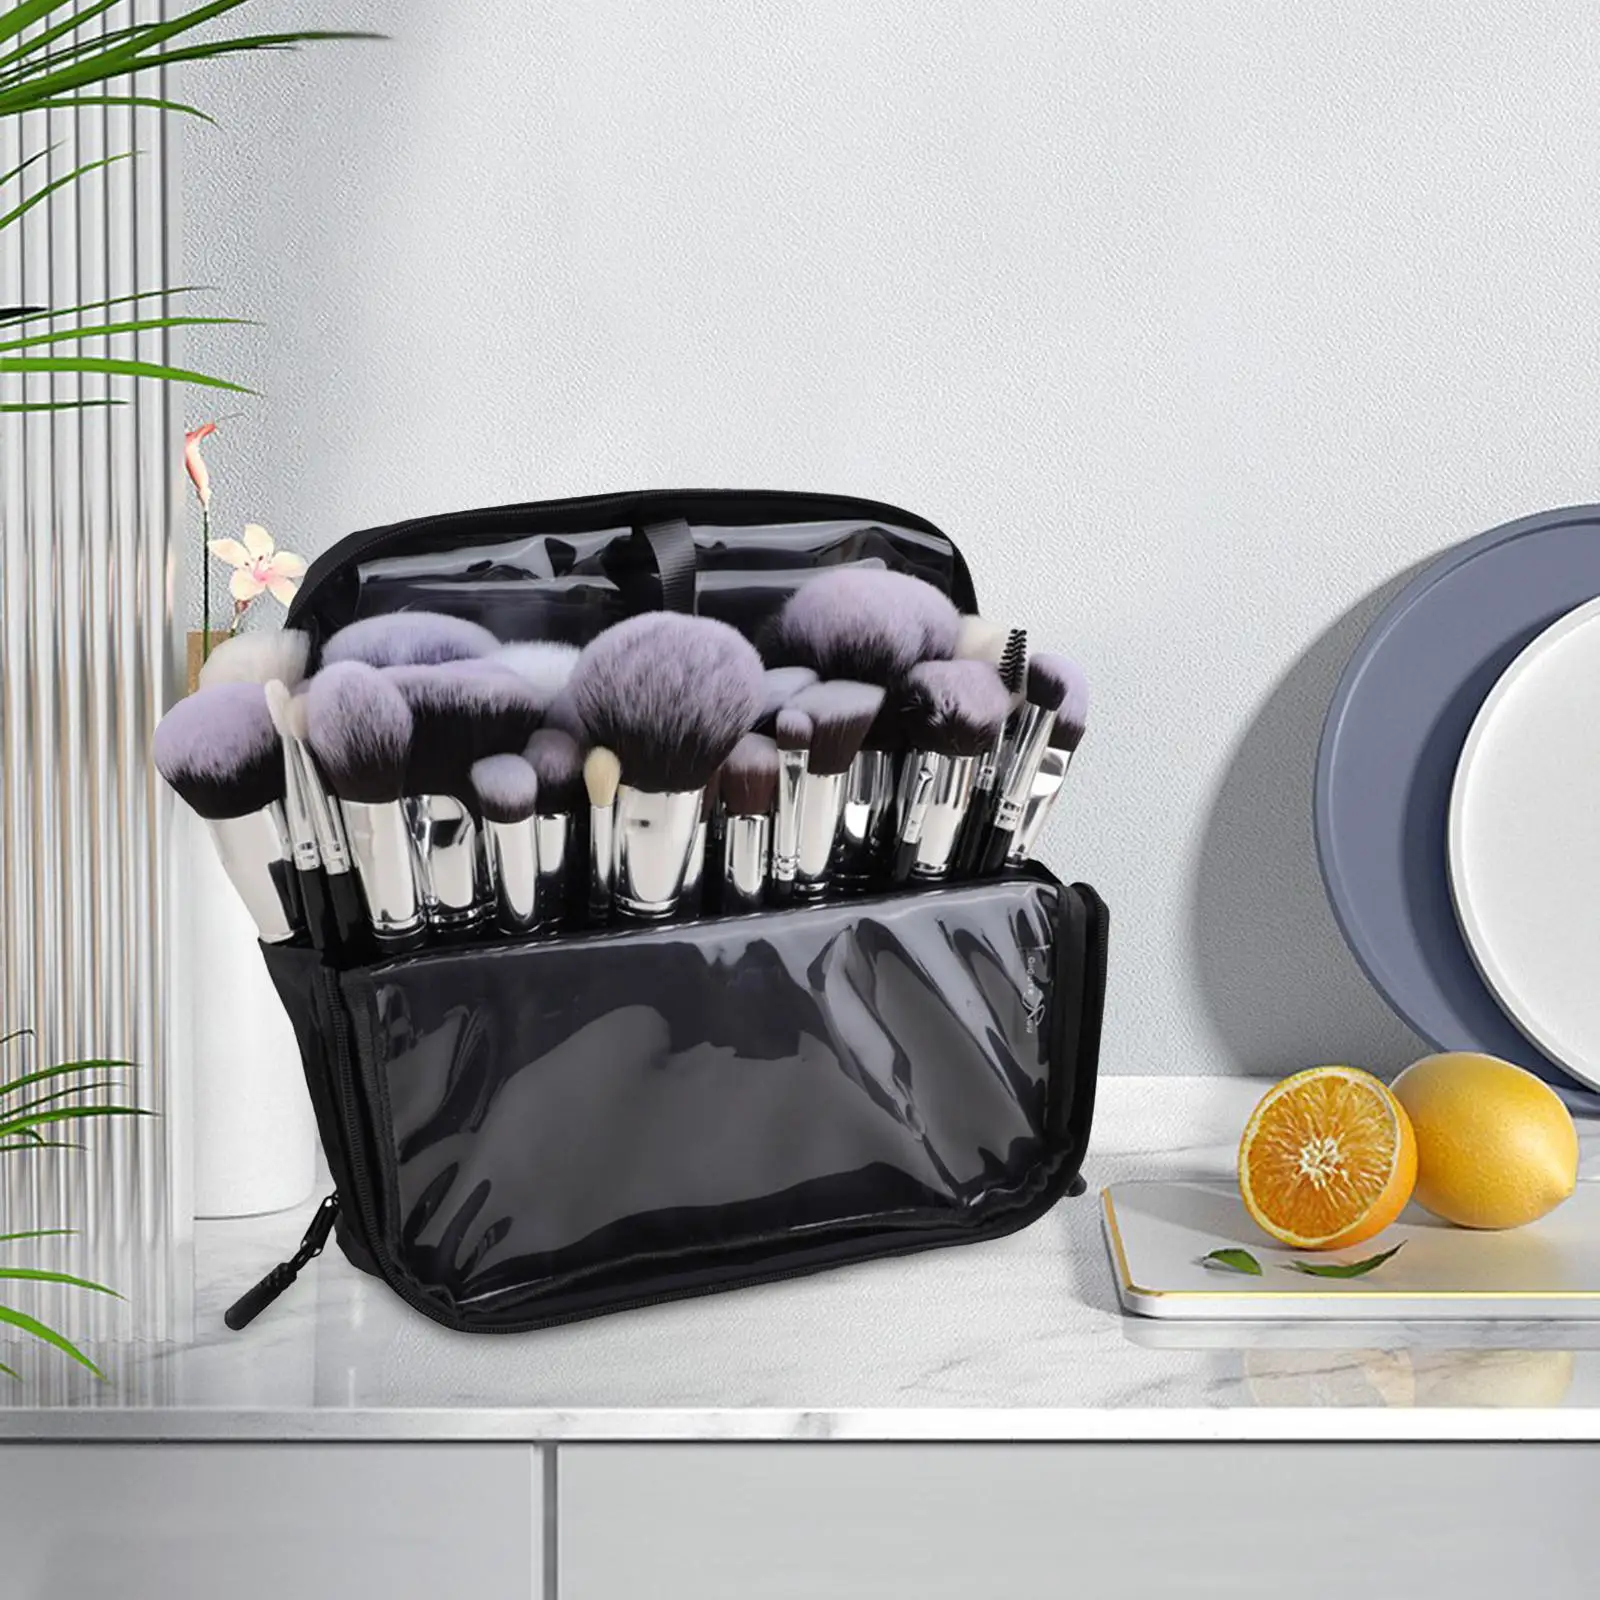 Travel Makeup Brush Holder Pouch Compact Carrying Bag Makeup Handbag Portable Foldable Large for Eyebrow Pencil Women Girls